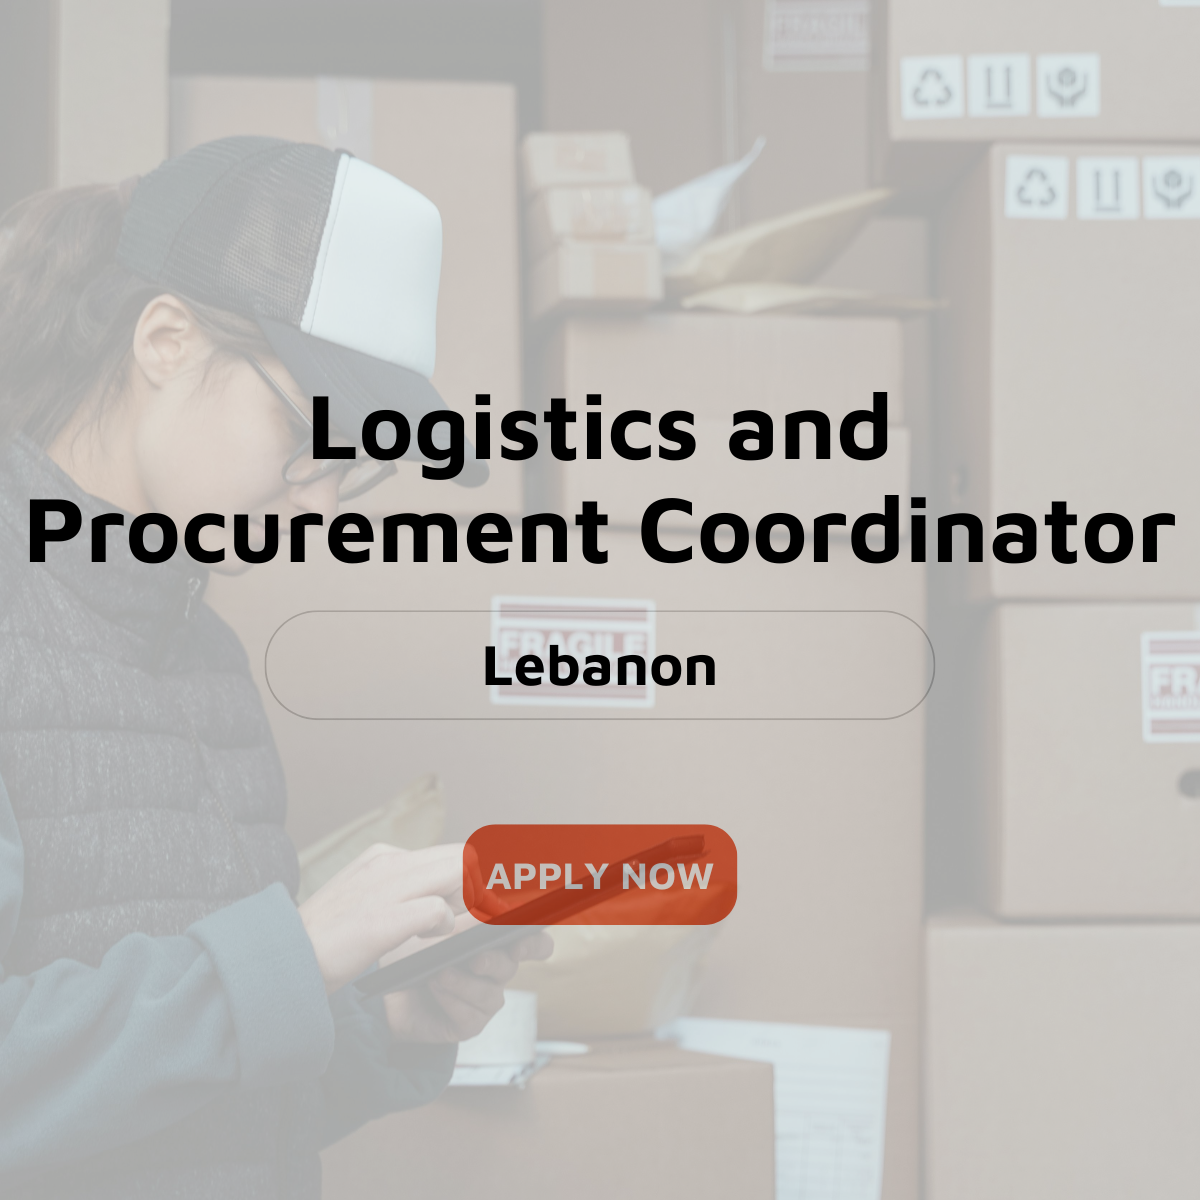 Logistics and Procurement Coordinator